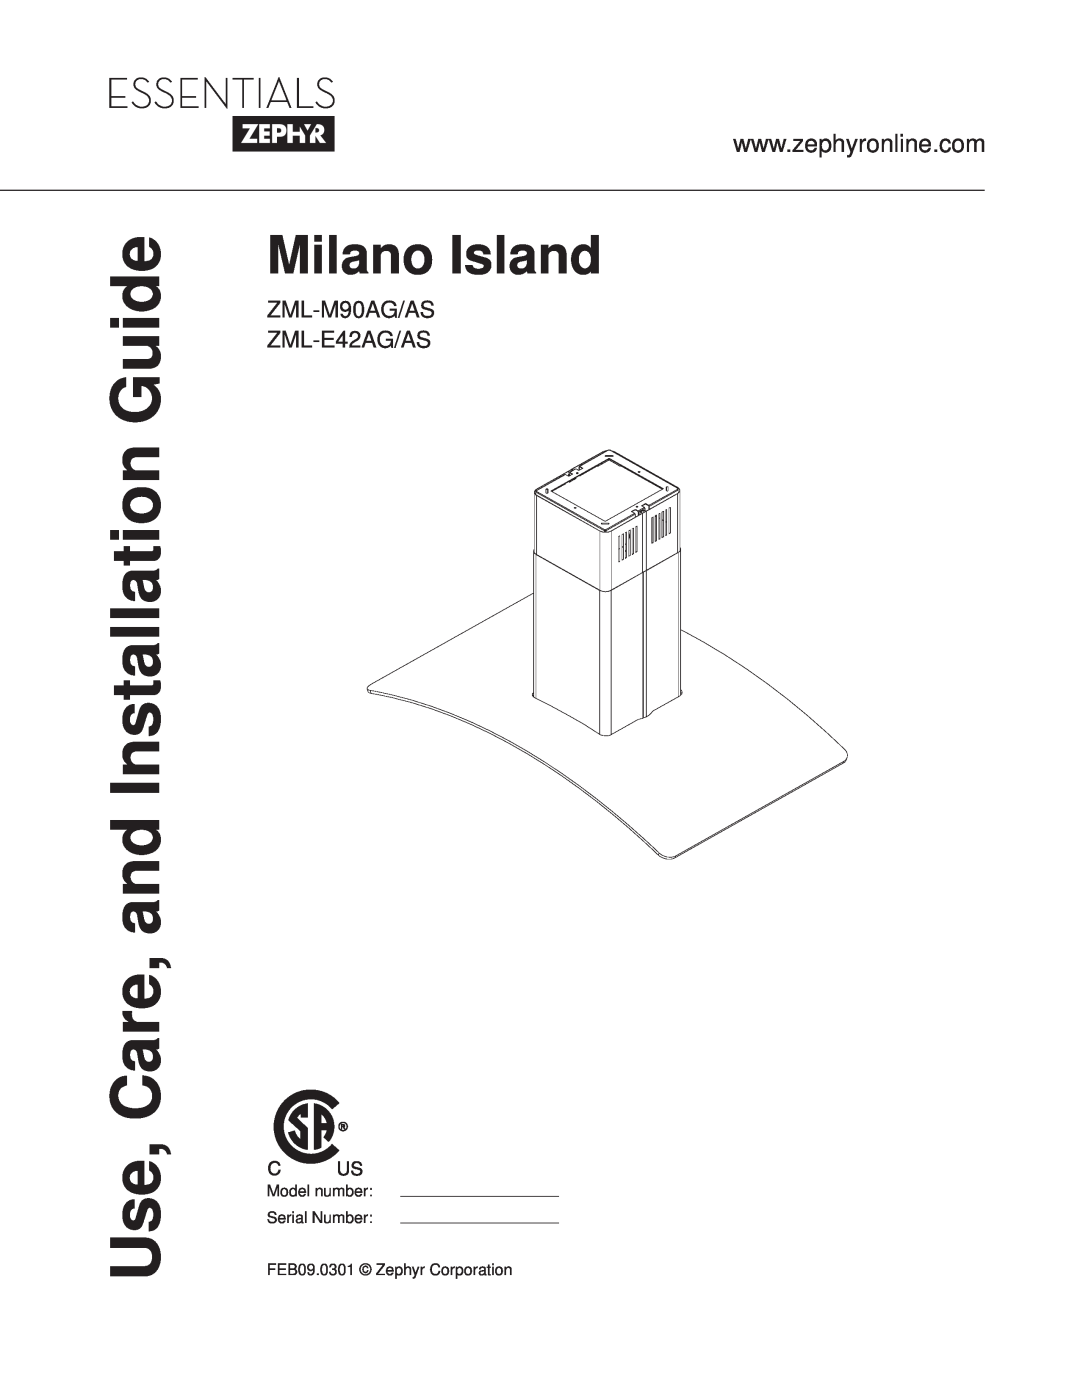 Zephyr ZML-E42AG/AS, ZML-M90AG/AS manual Use, Care, and Installation Guide, Milano Island 